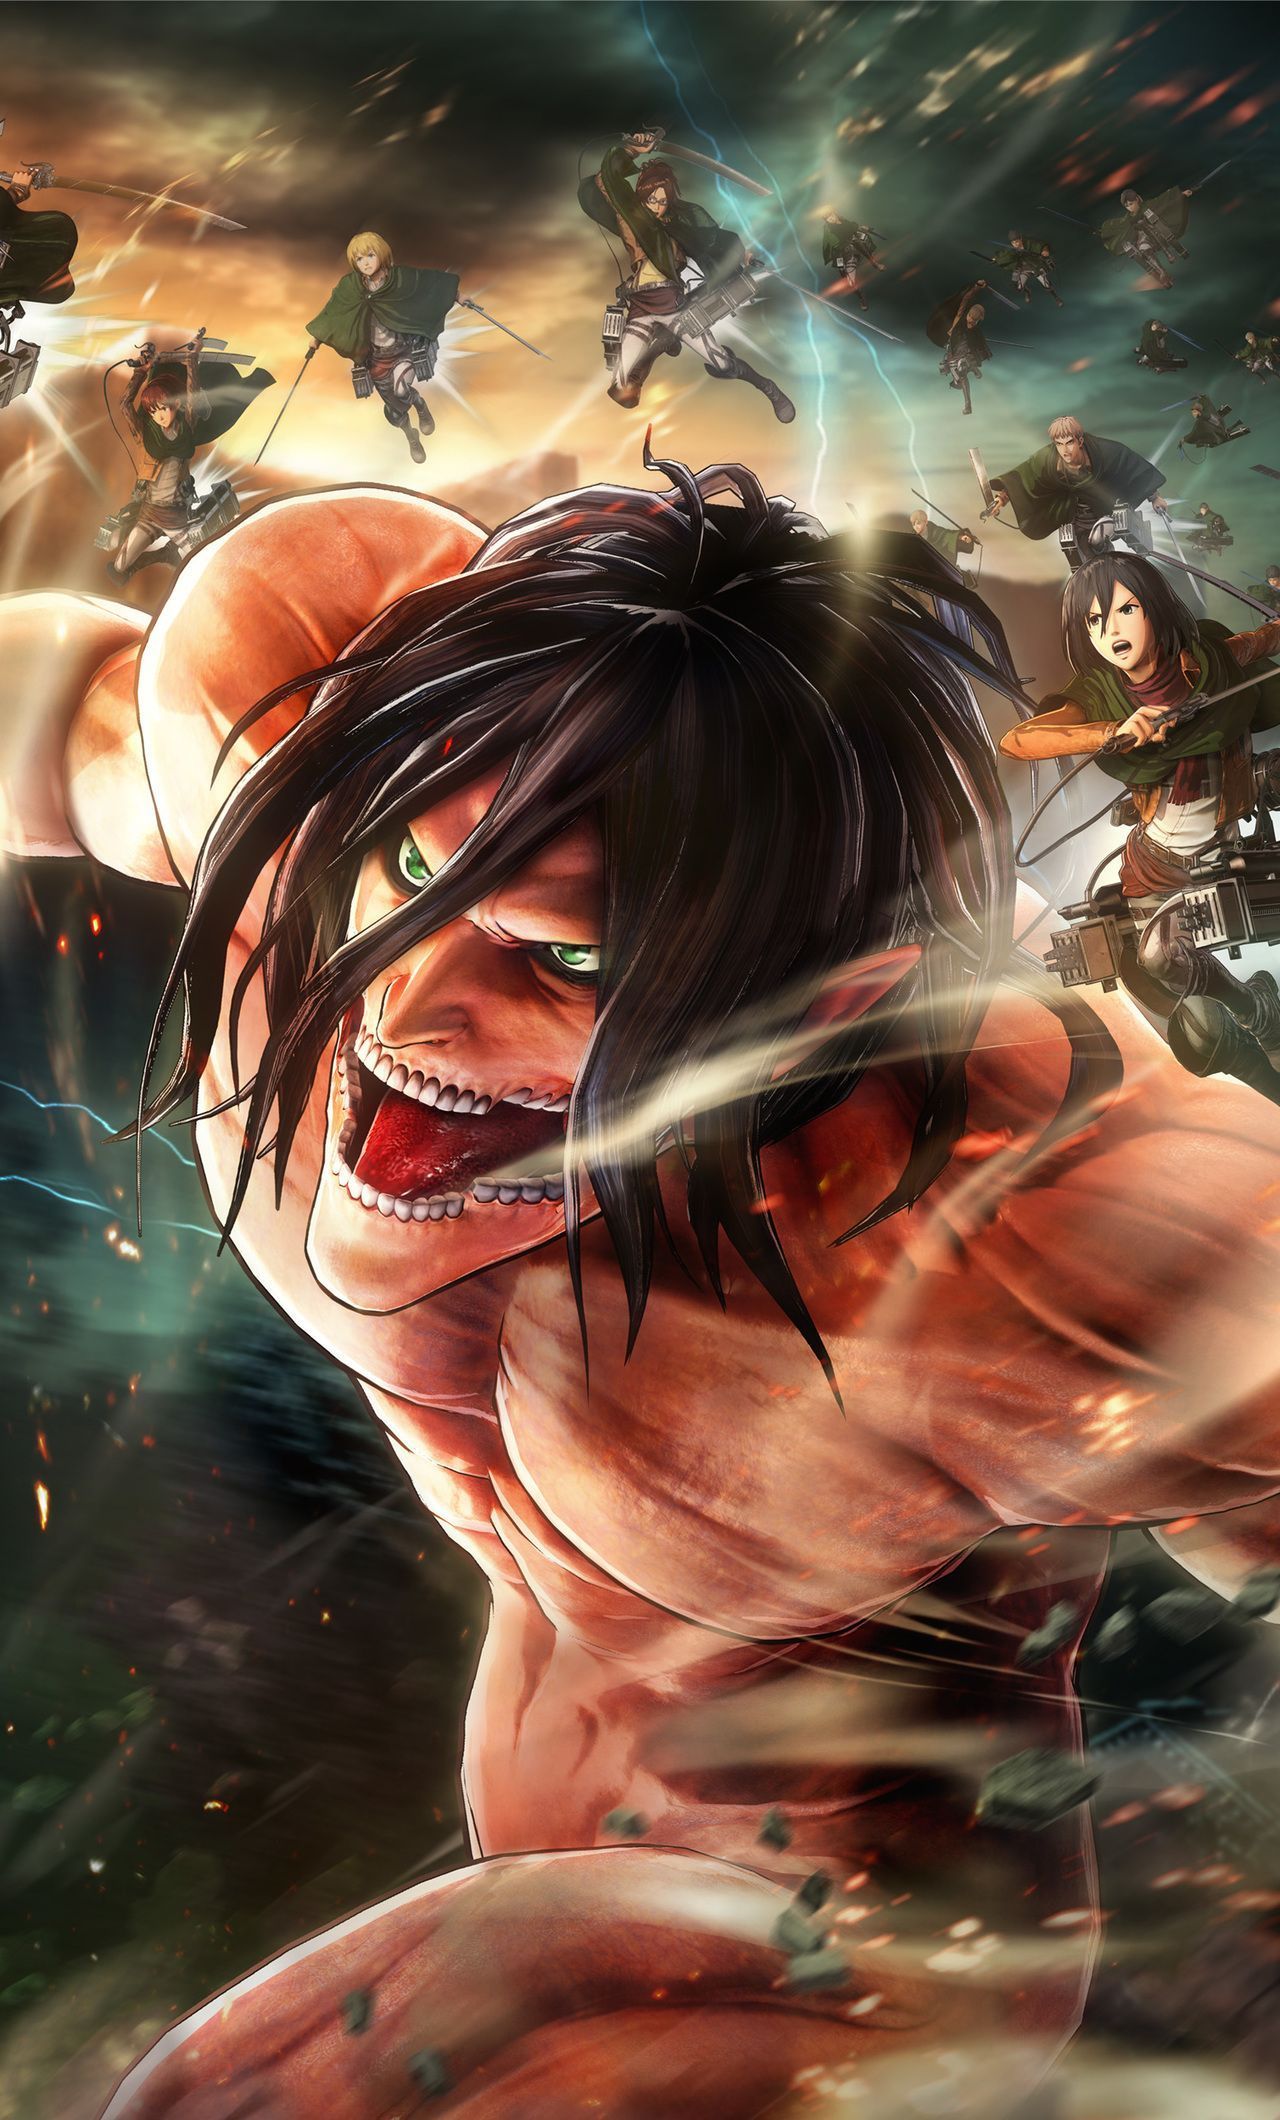 Attack On Titan Wallpaper iPhone Xr. Anime Wallpaper. Attack on titan art, Attack on titan fanart, Attack on titan eren